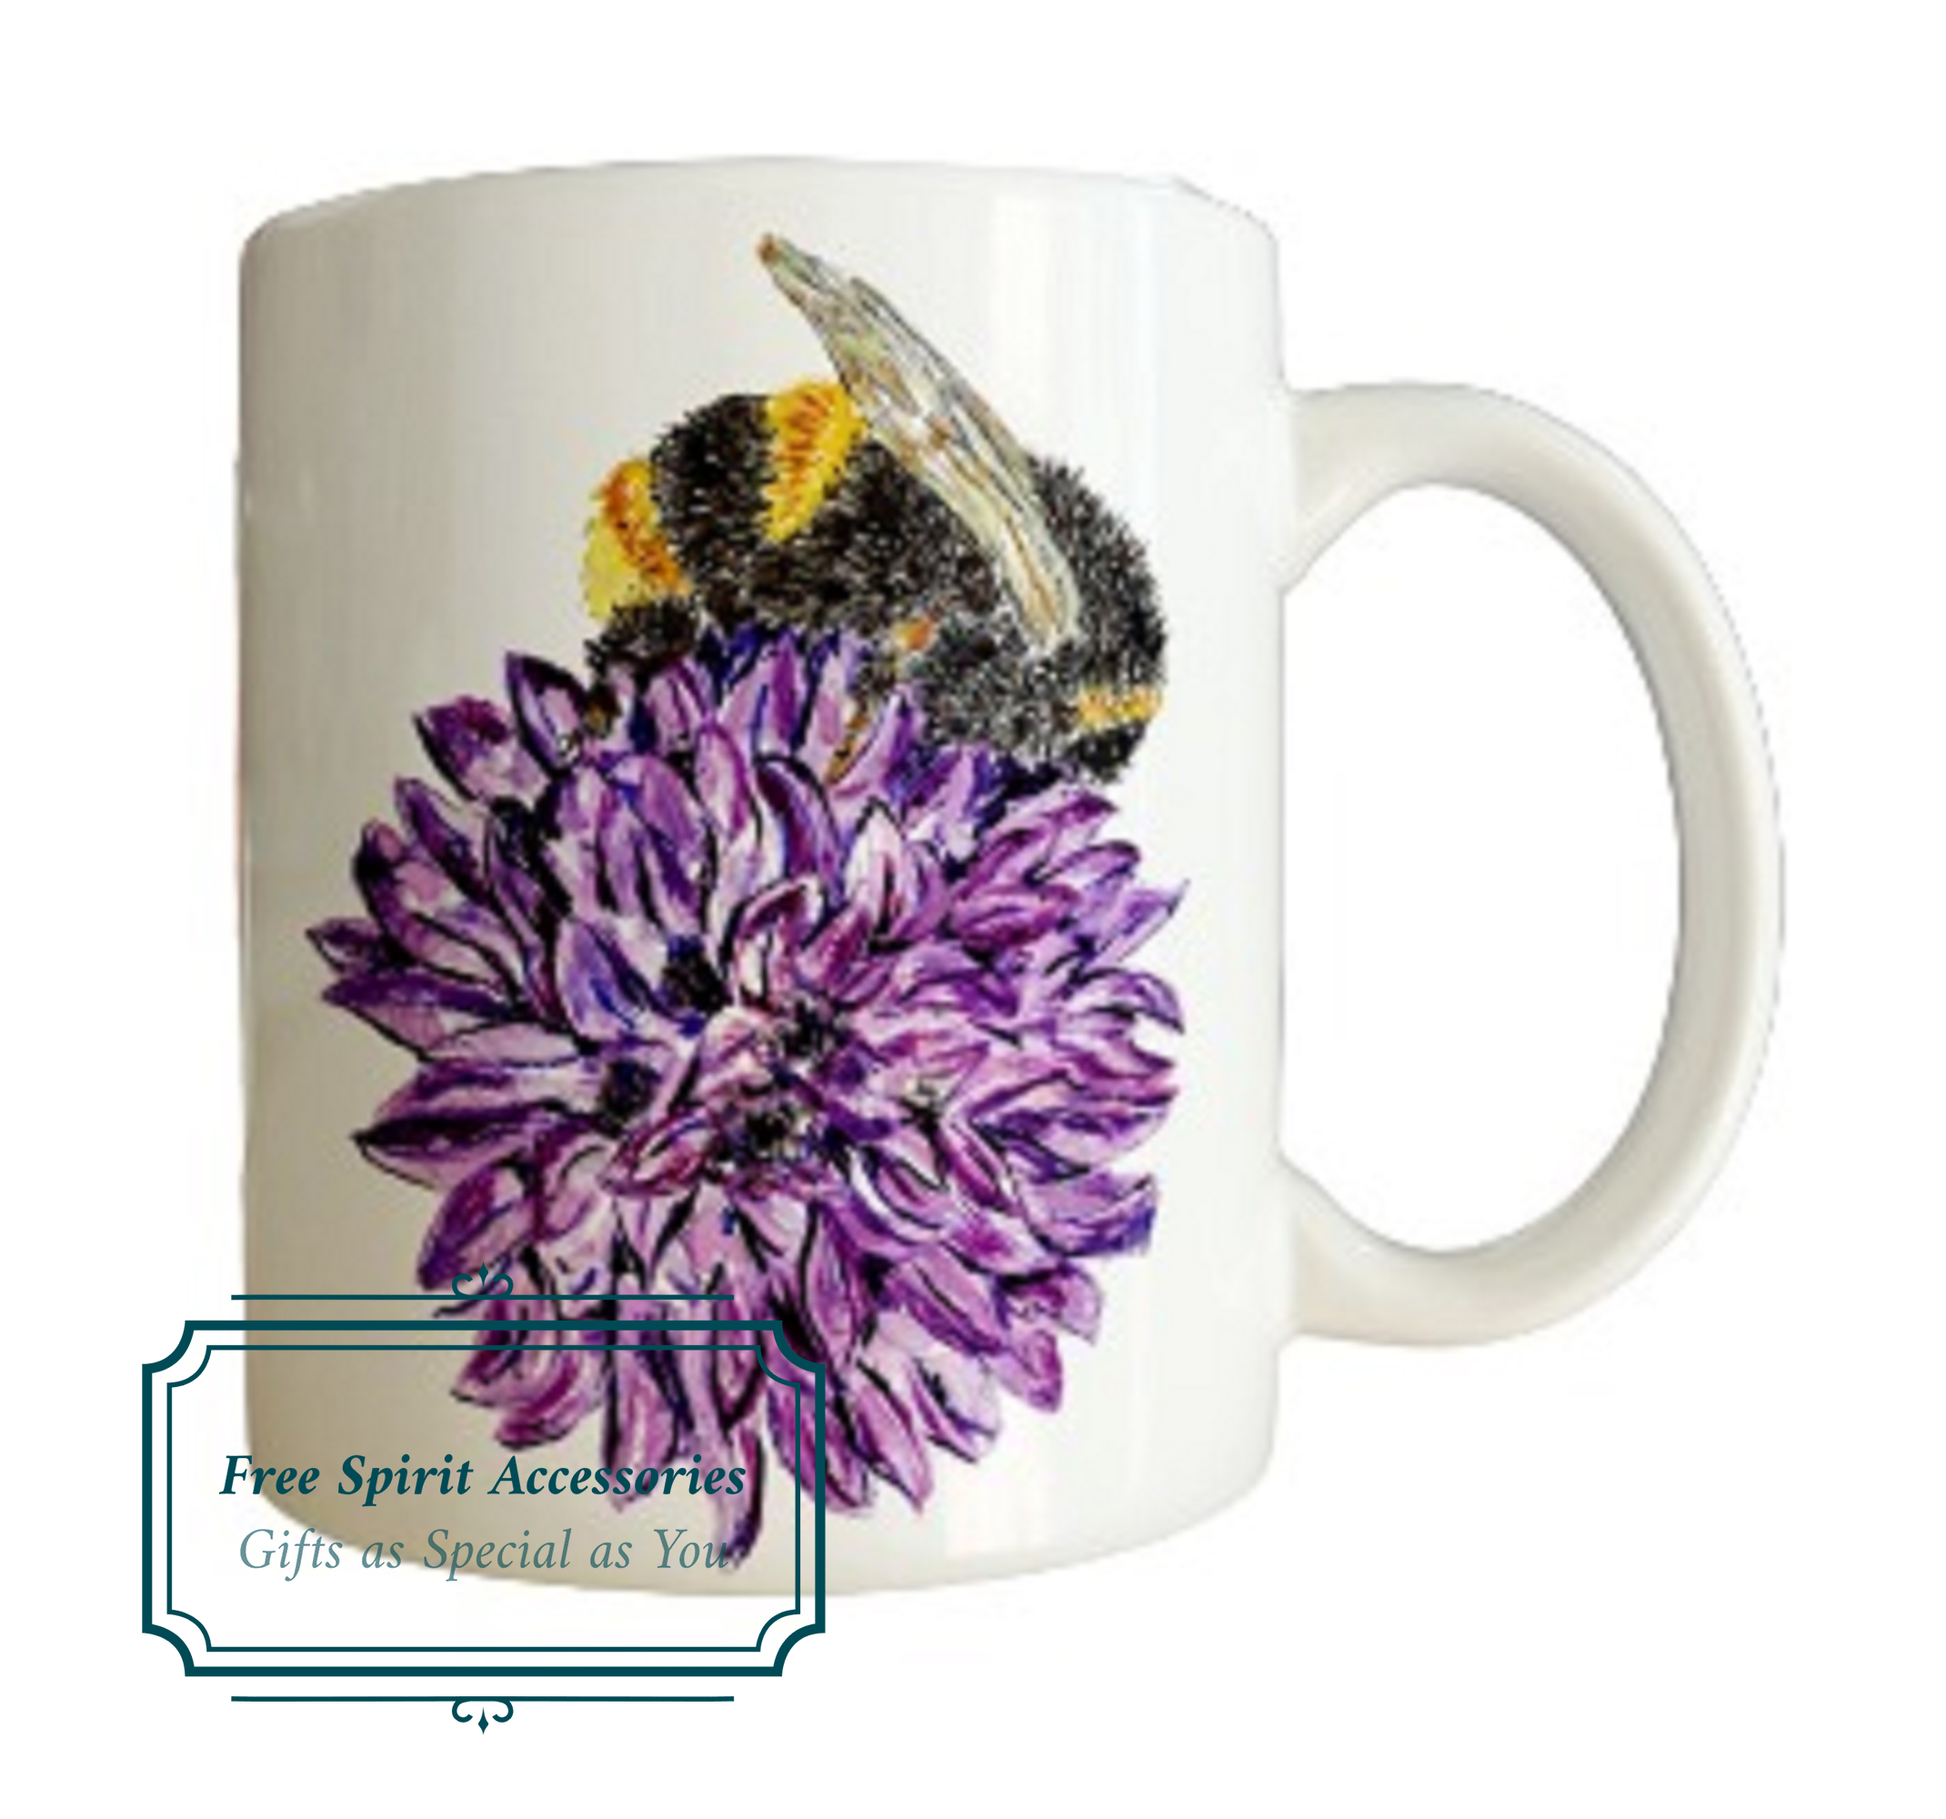  Bee on a Flower Coffee Mug by Free Spirit Accessories sold by Free Spirit Accessories